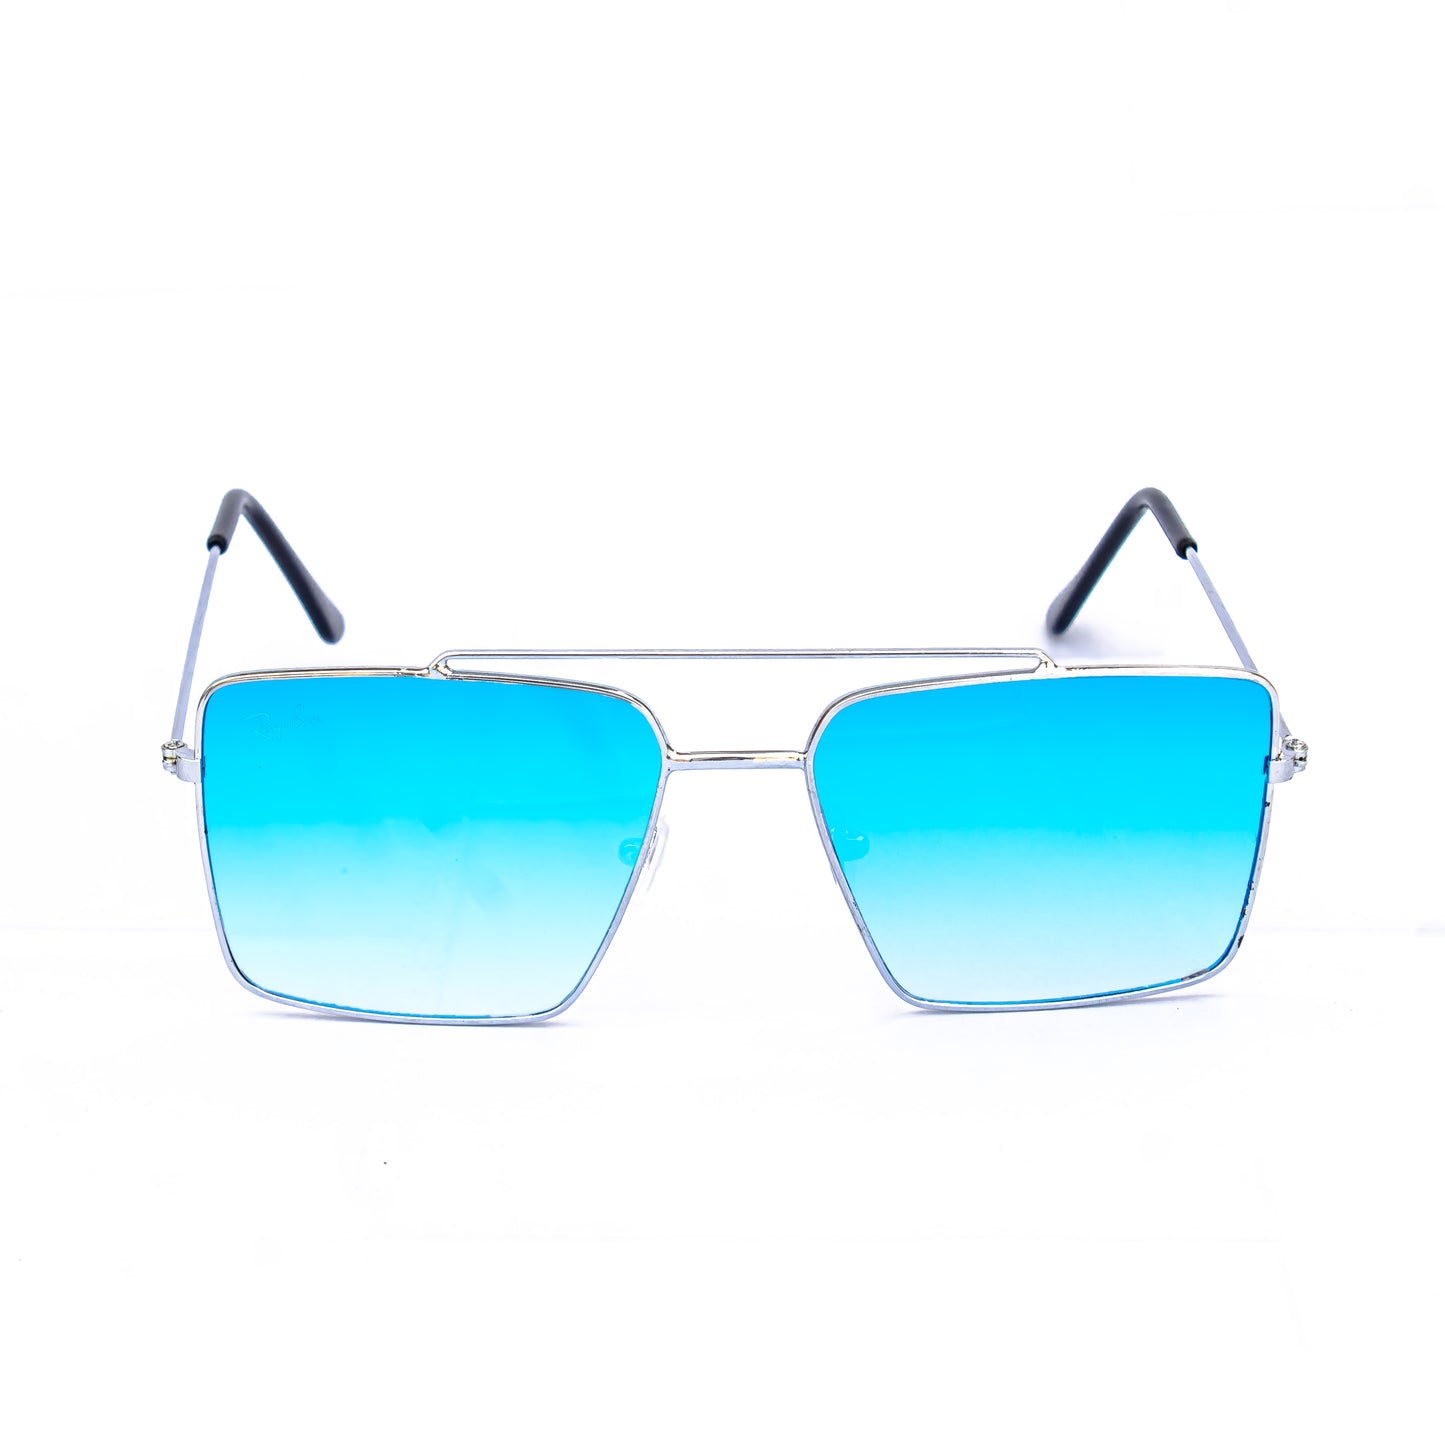 Jiebo Square Blue Reflective Sunglasses